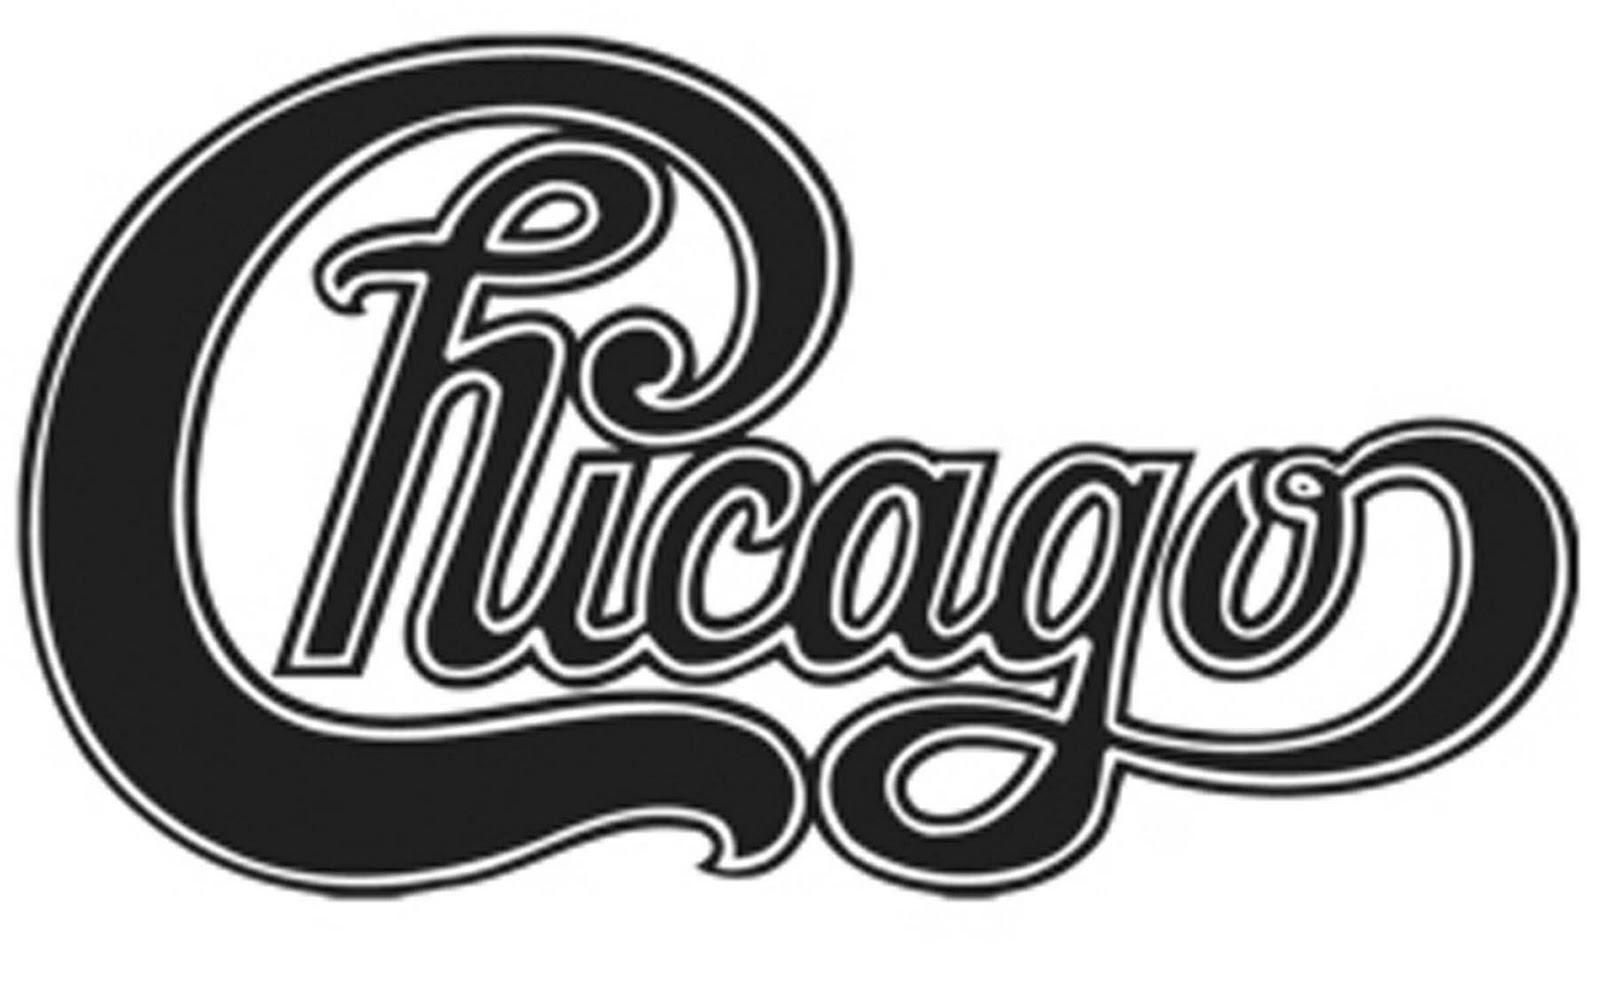 Chicago Logo - chicago-logo - Epic Rights